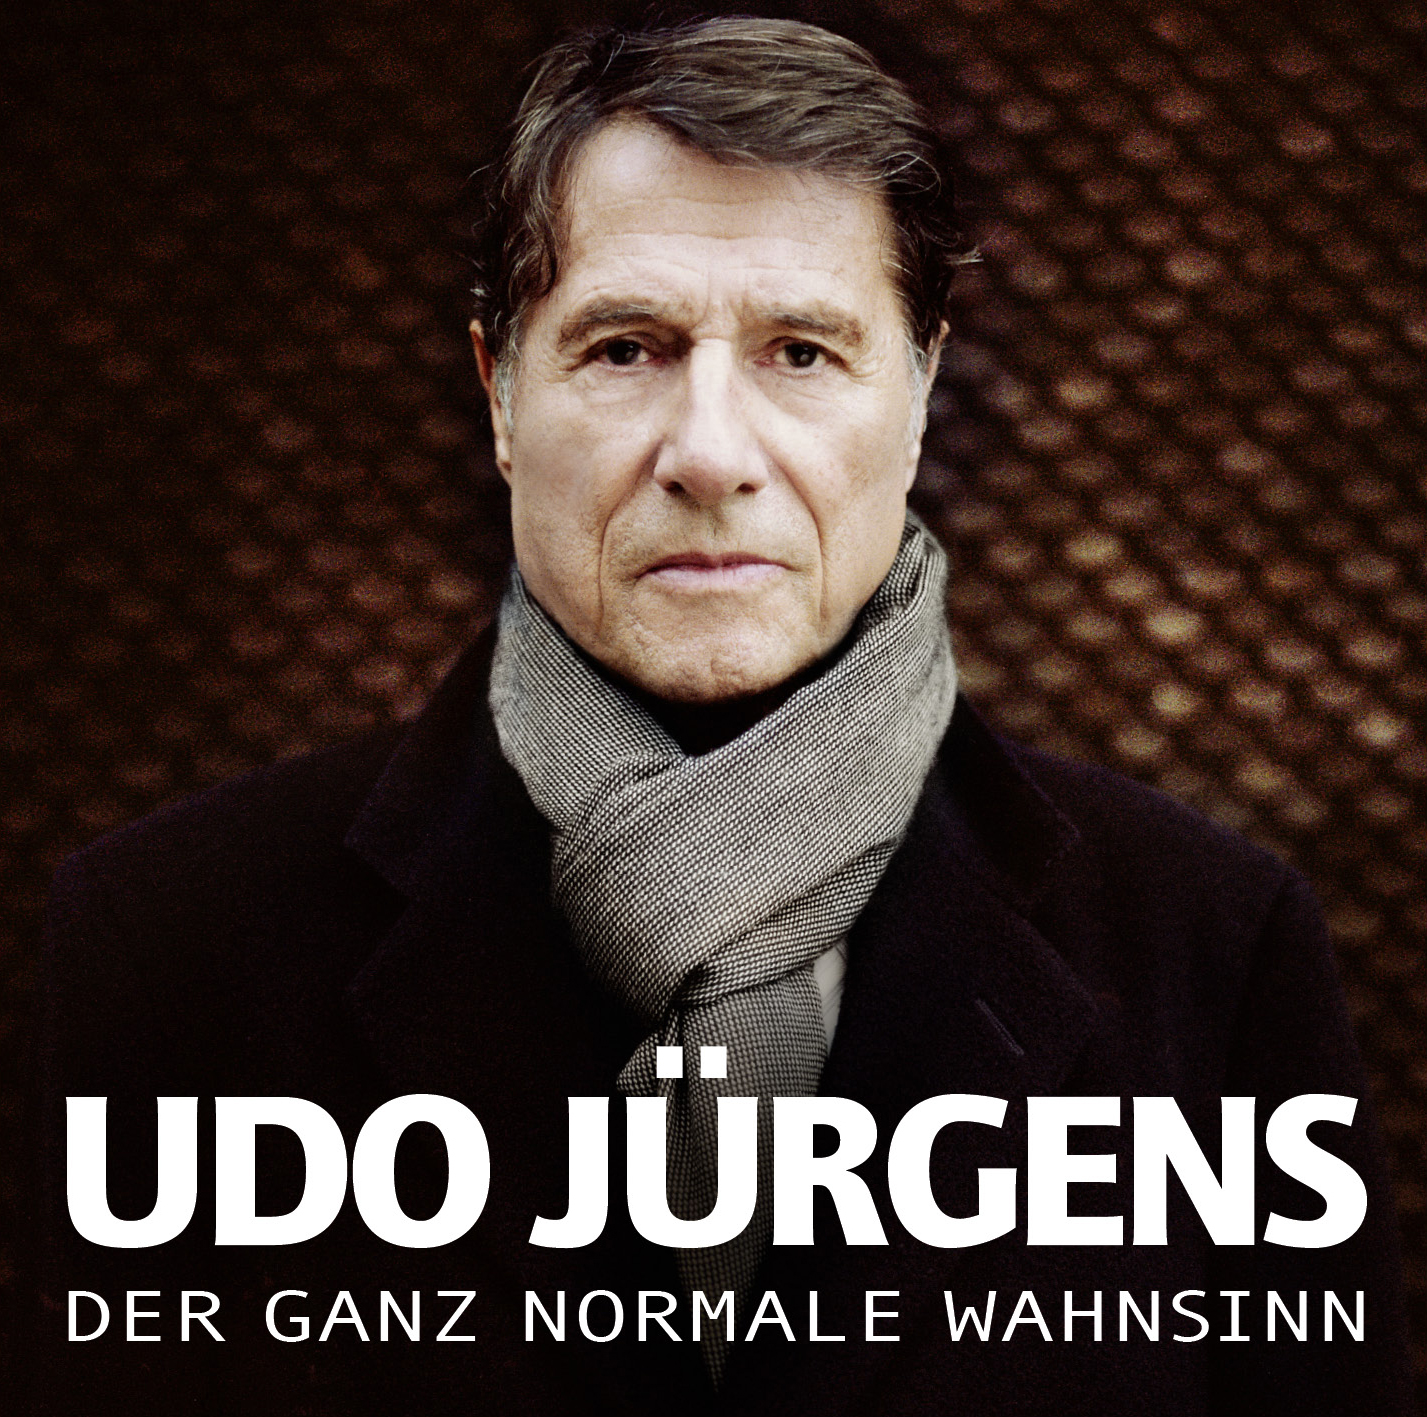 Obal Jürgensova alba z roku 2011.